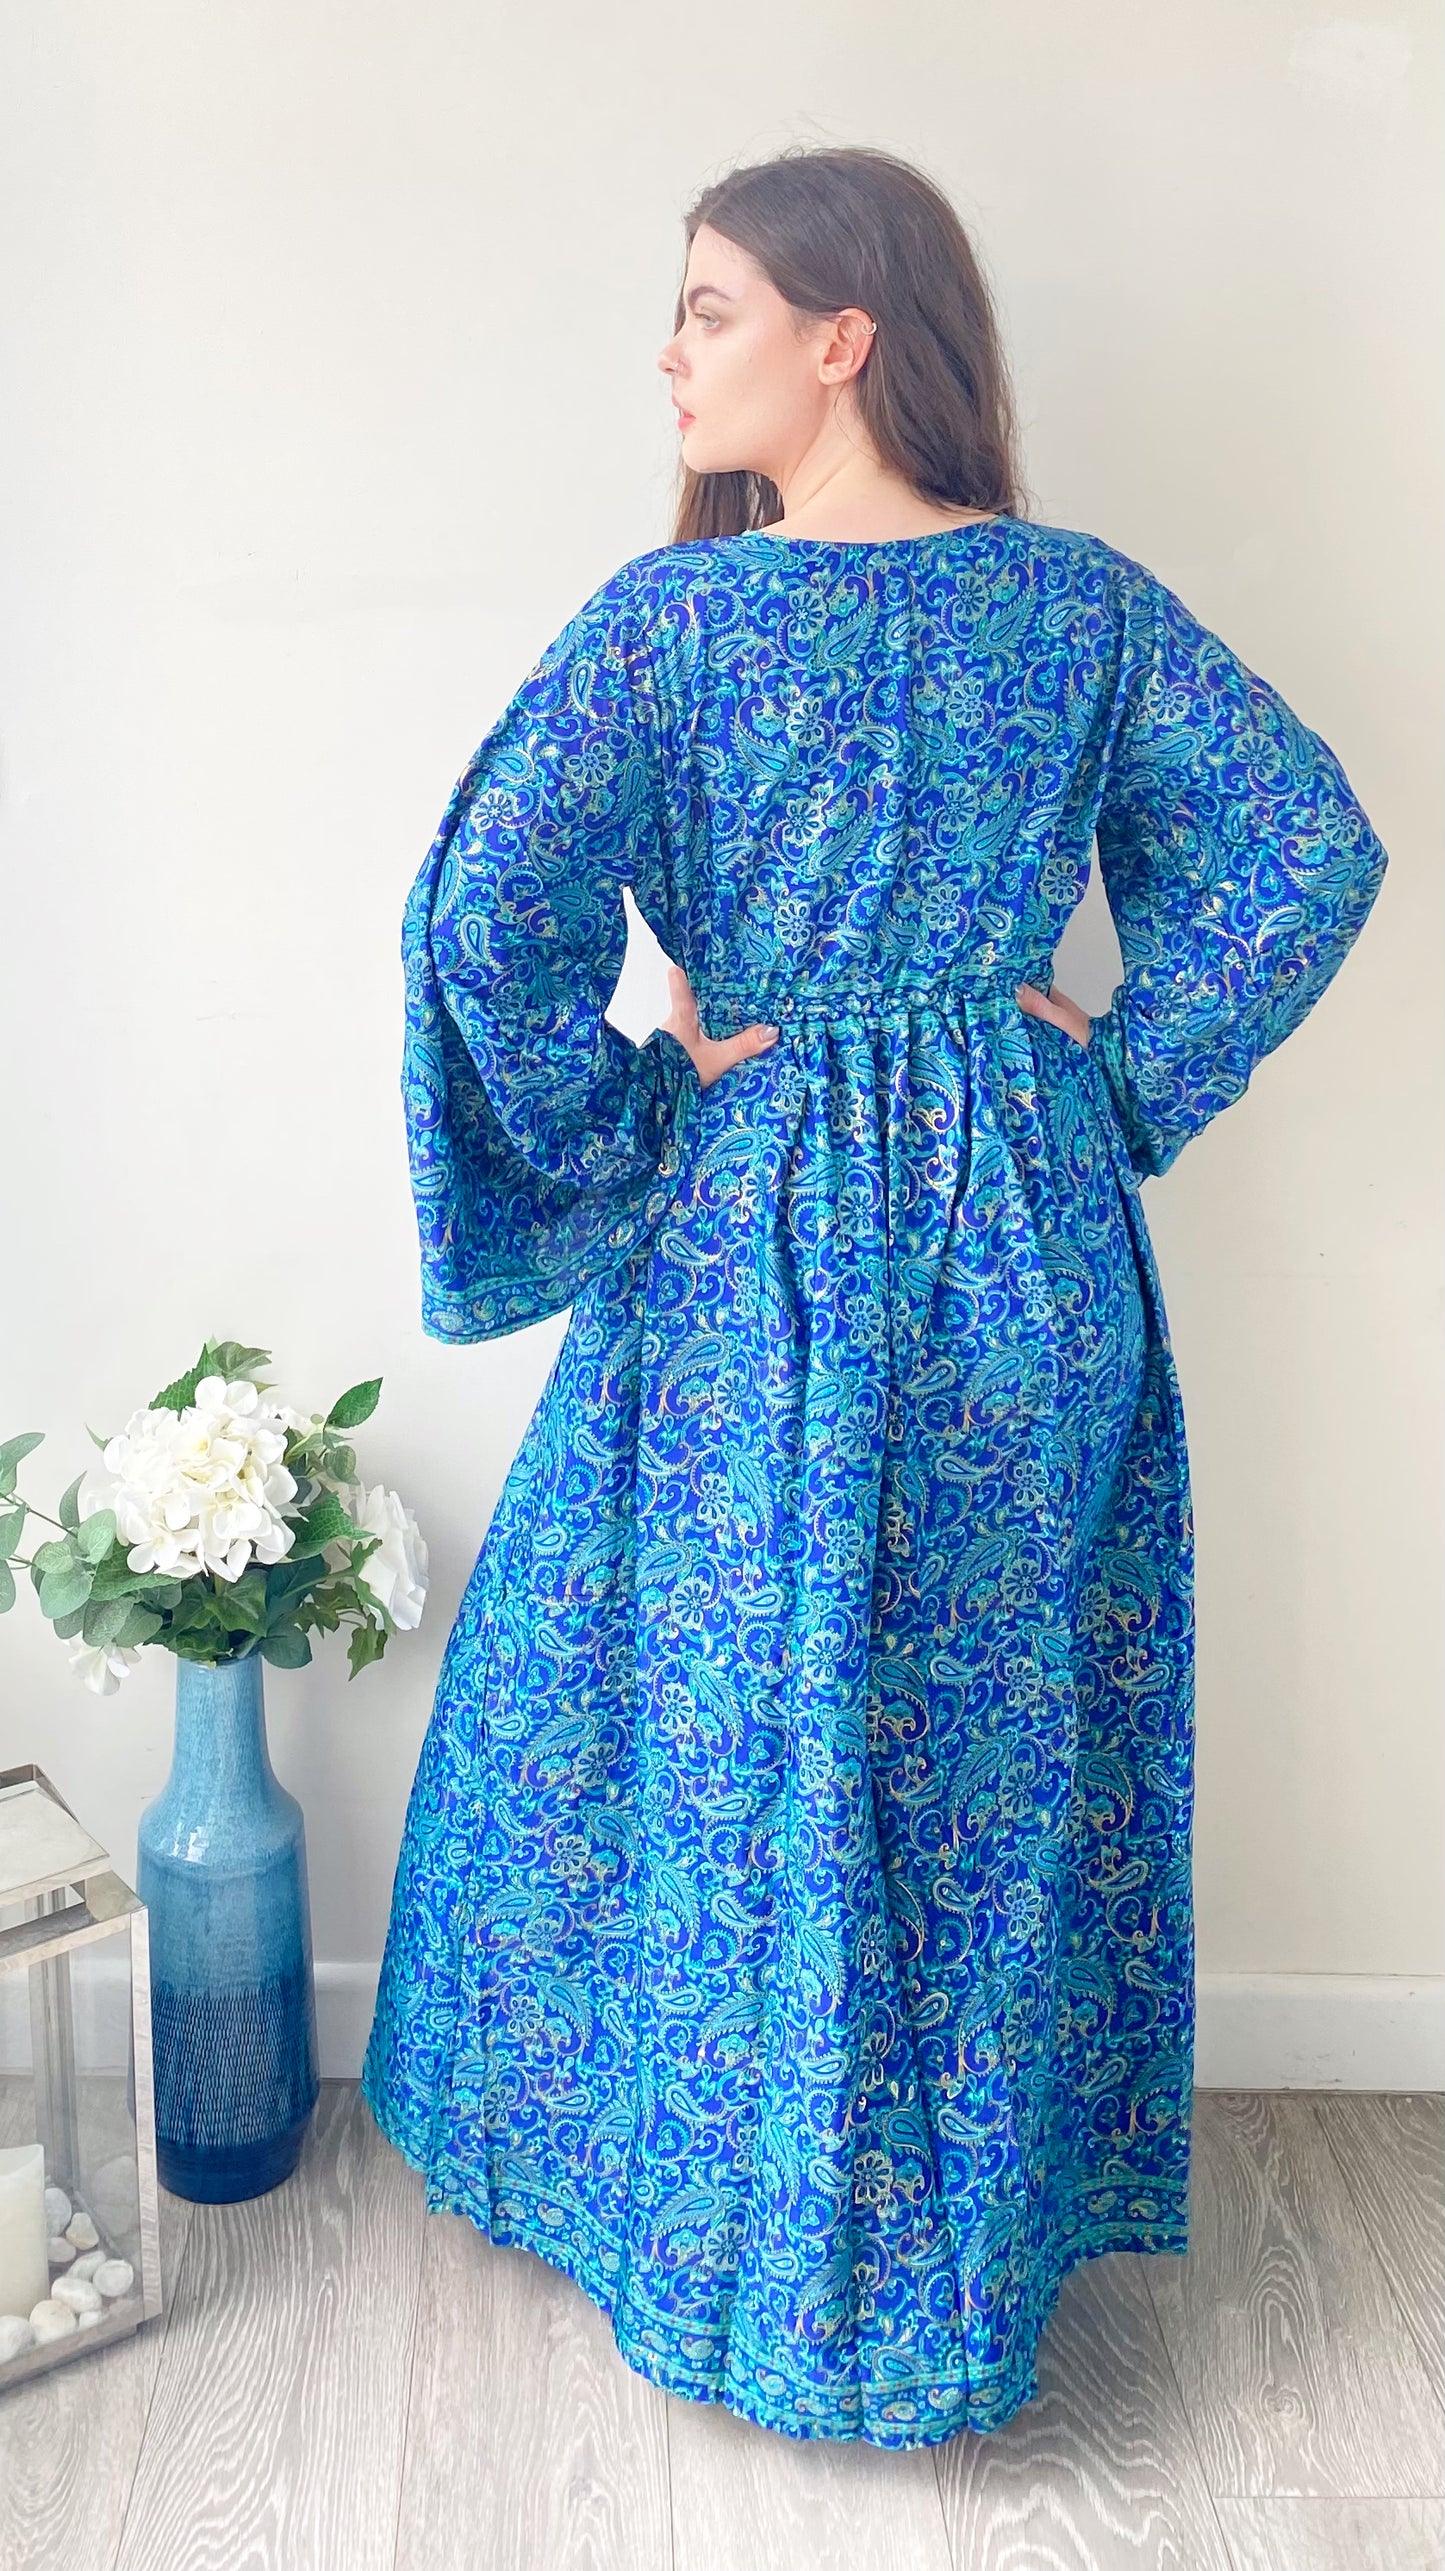 Nova royal-blue paisley-print silk maxi dress free size UK8-16